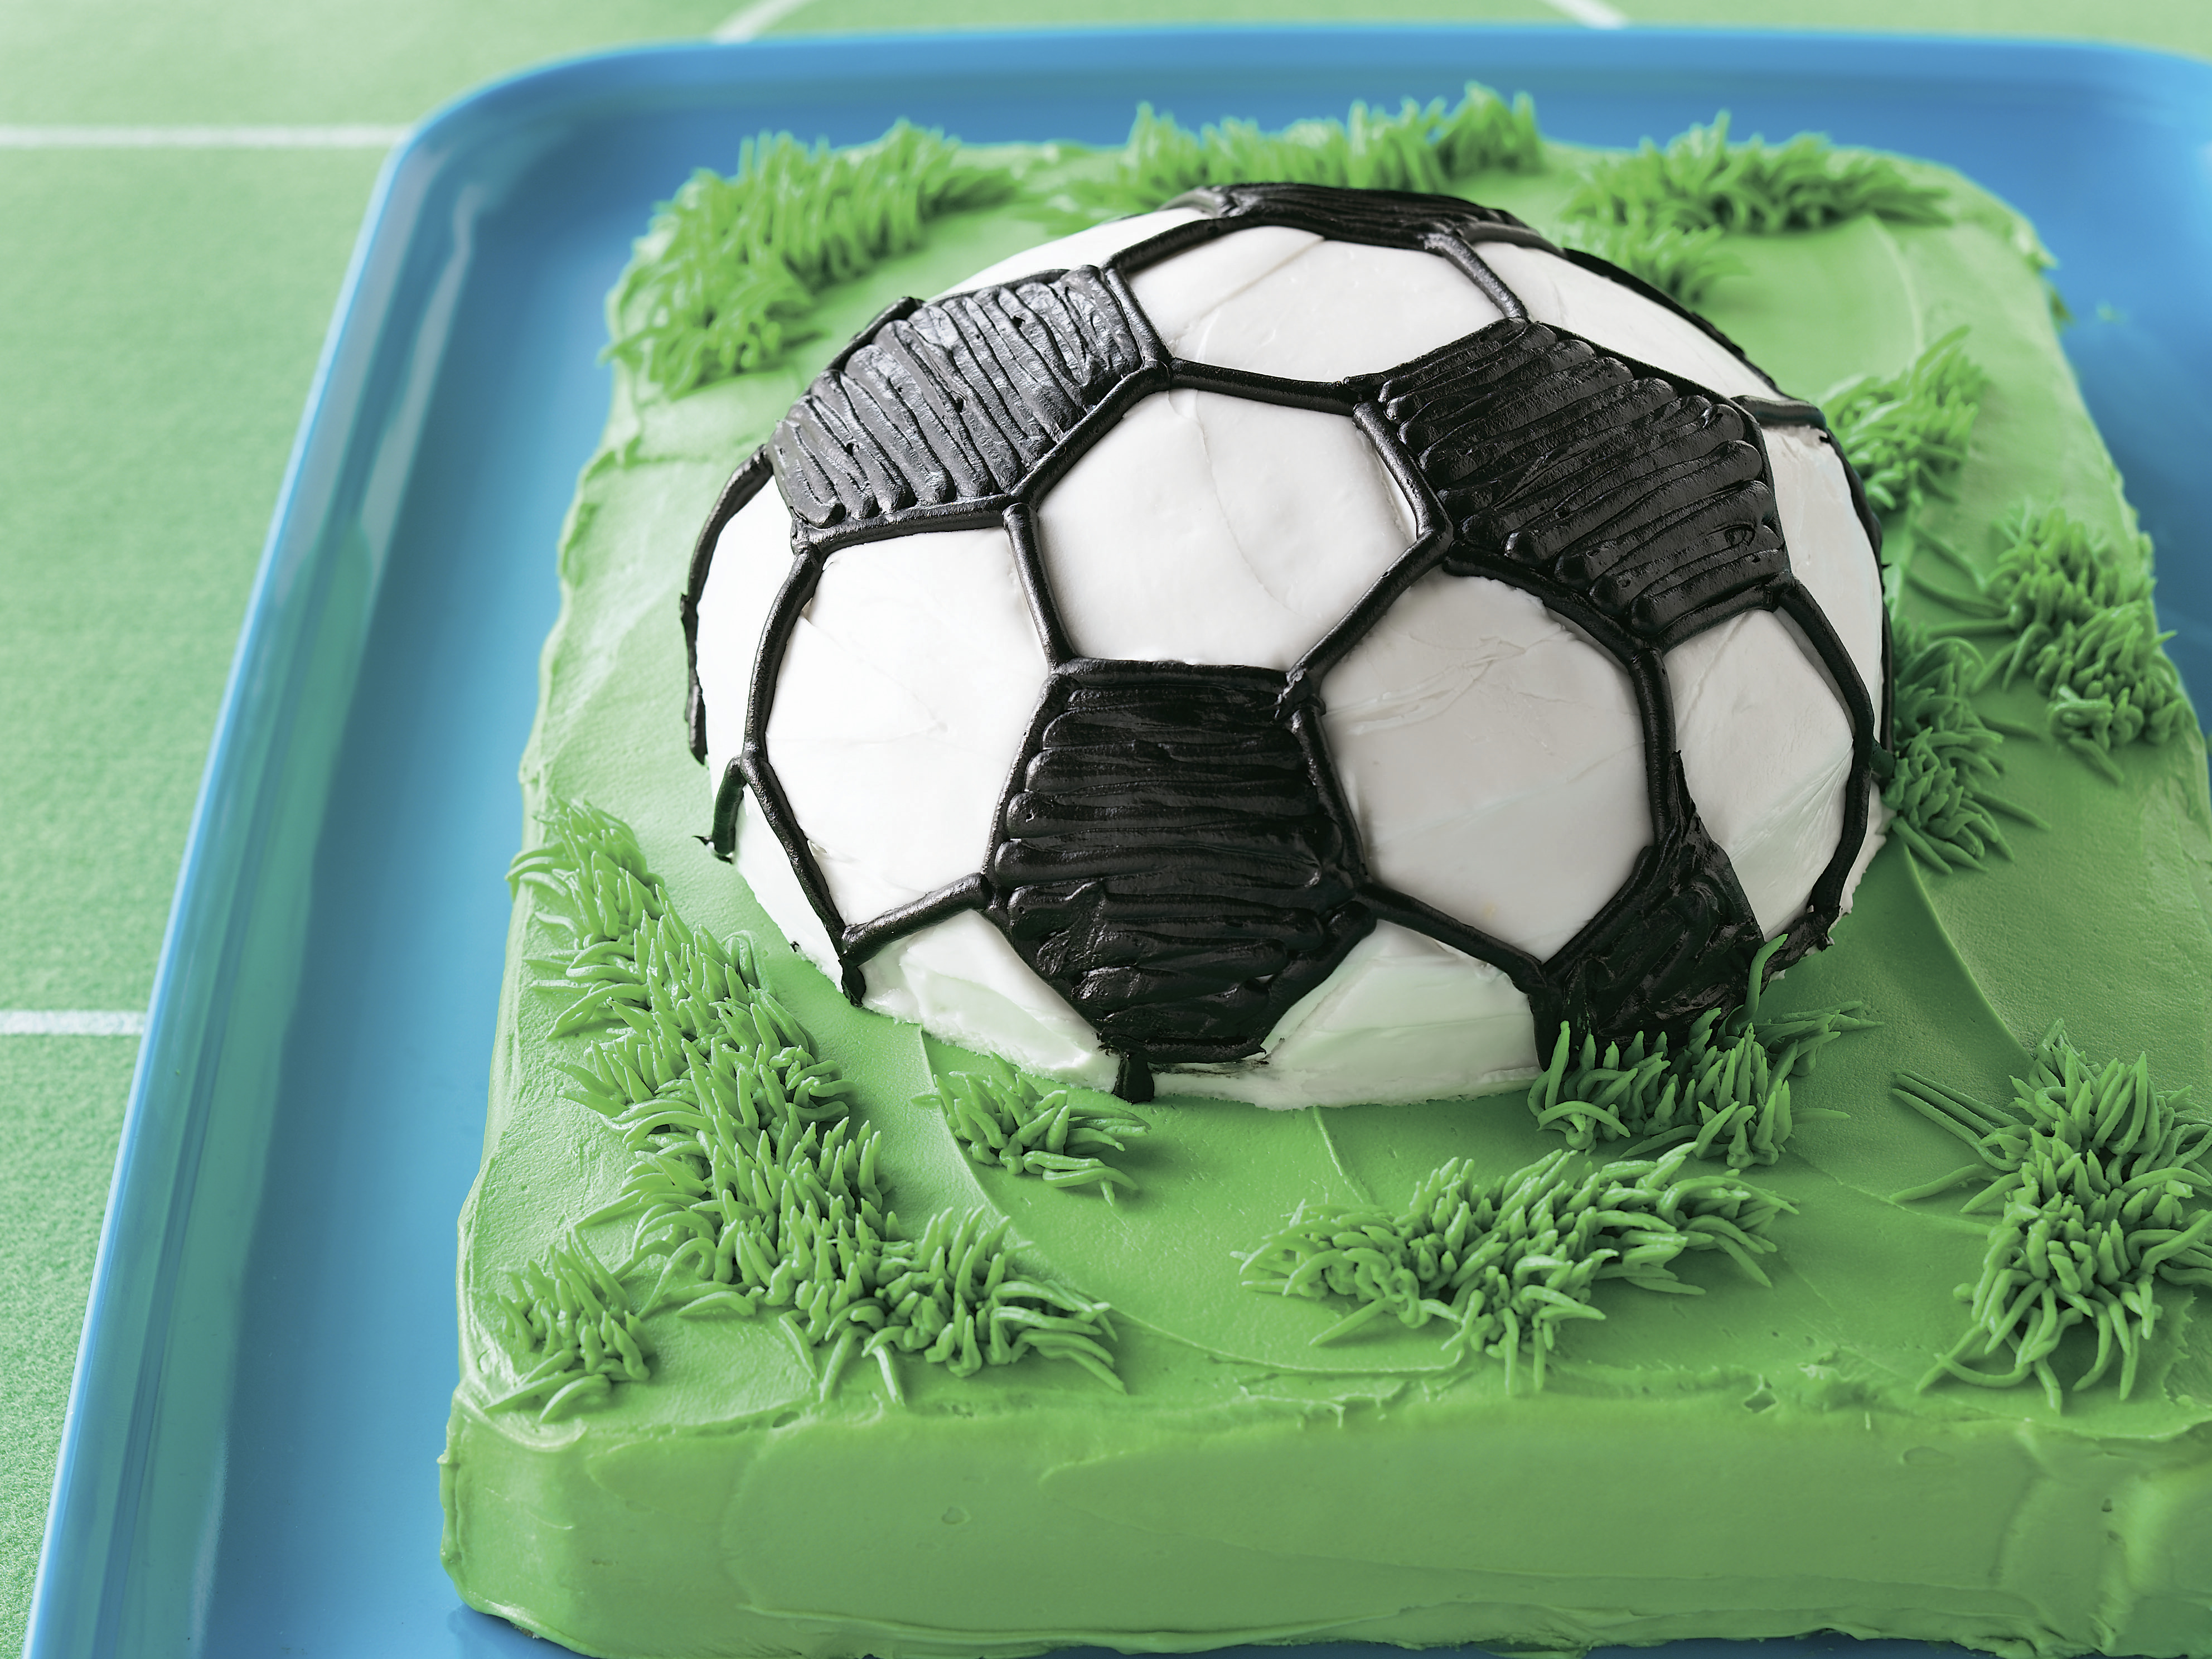 Football Cake Images | Football Cake Price